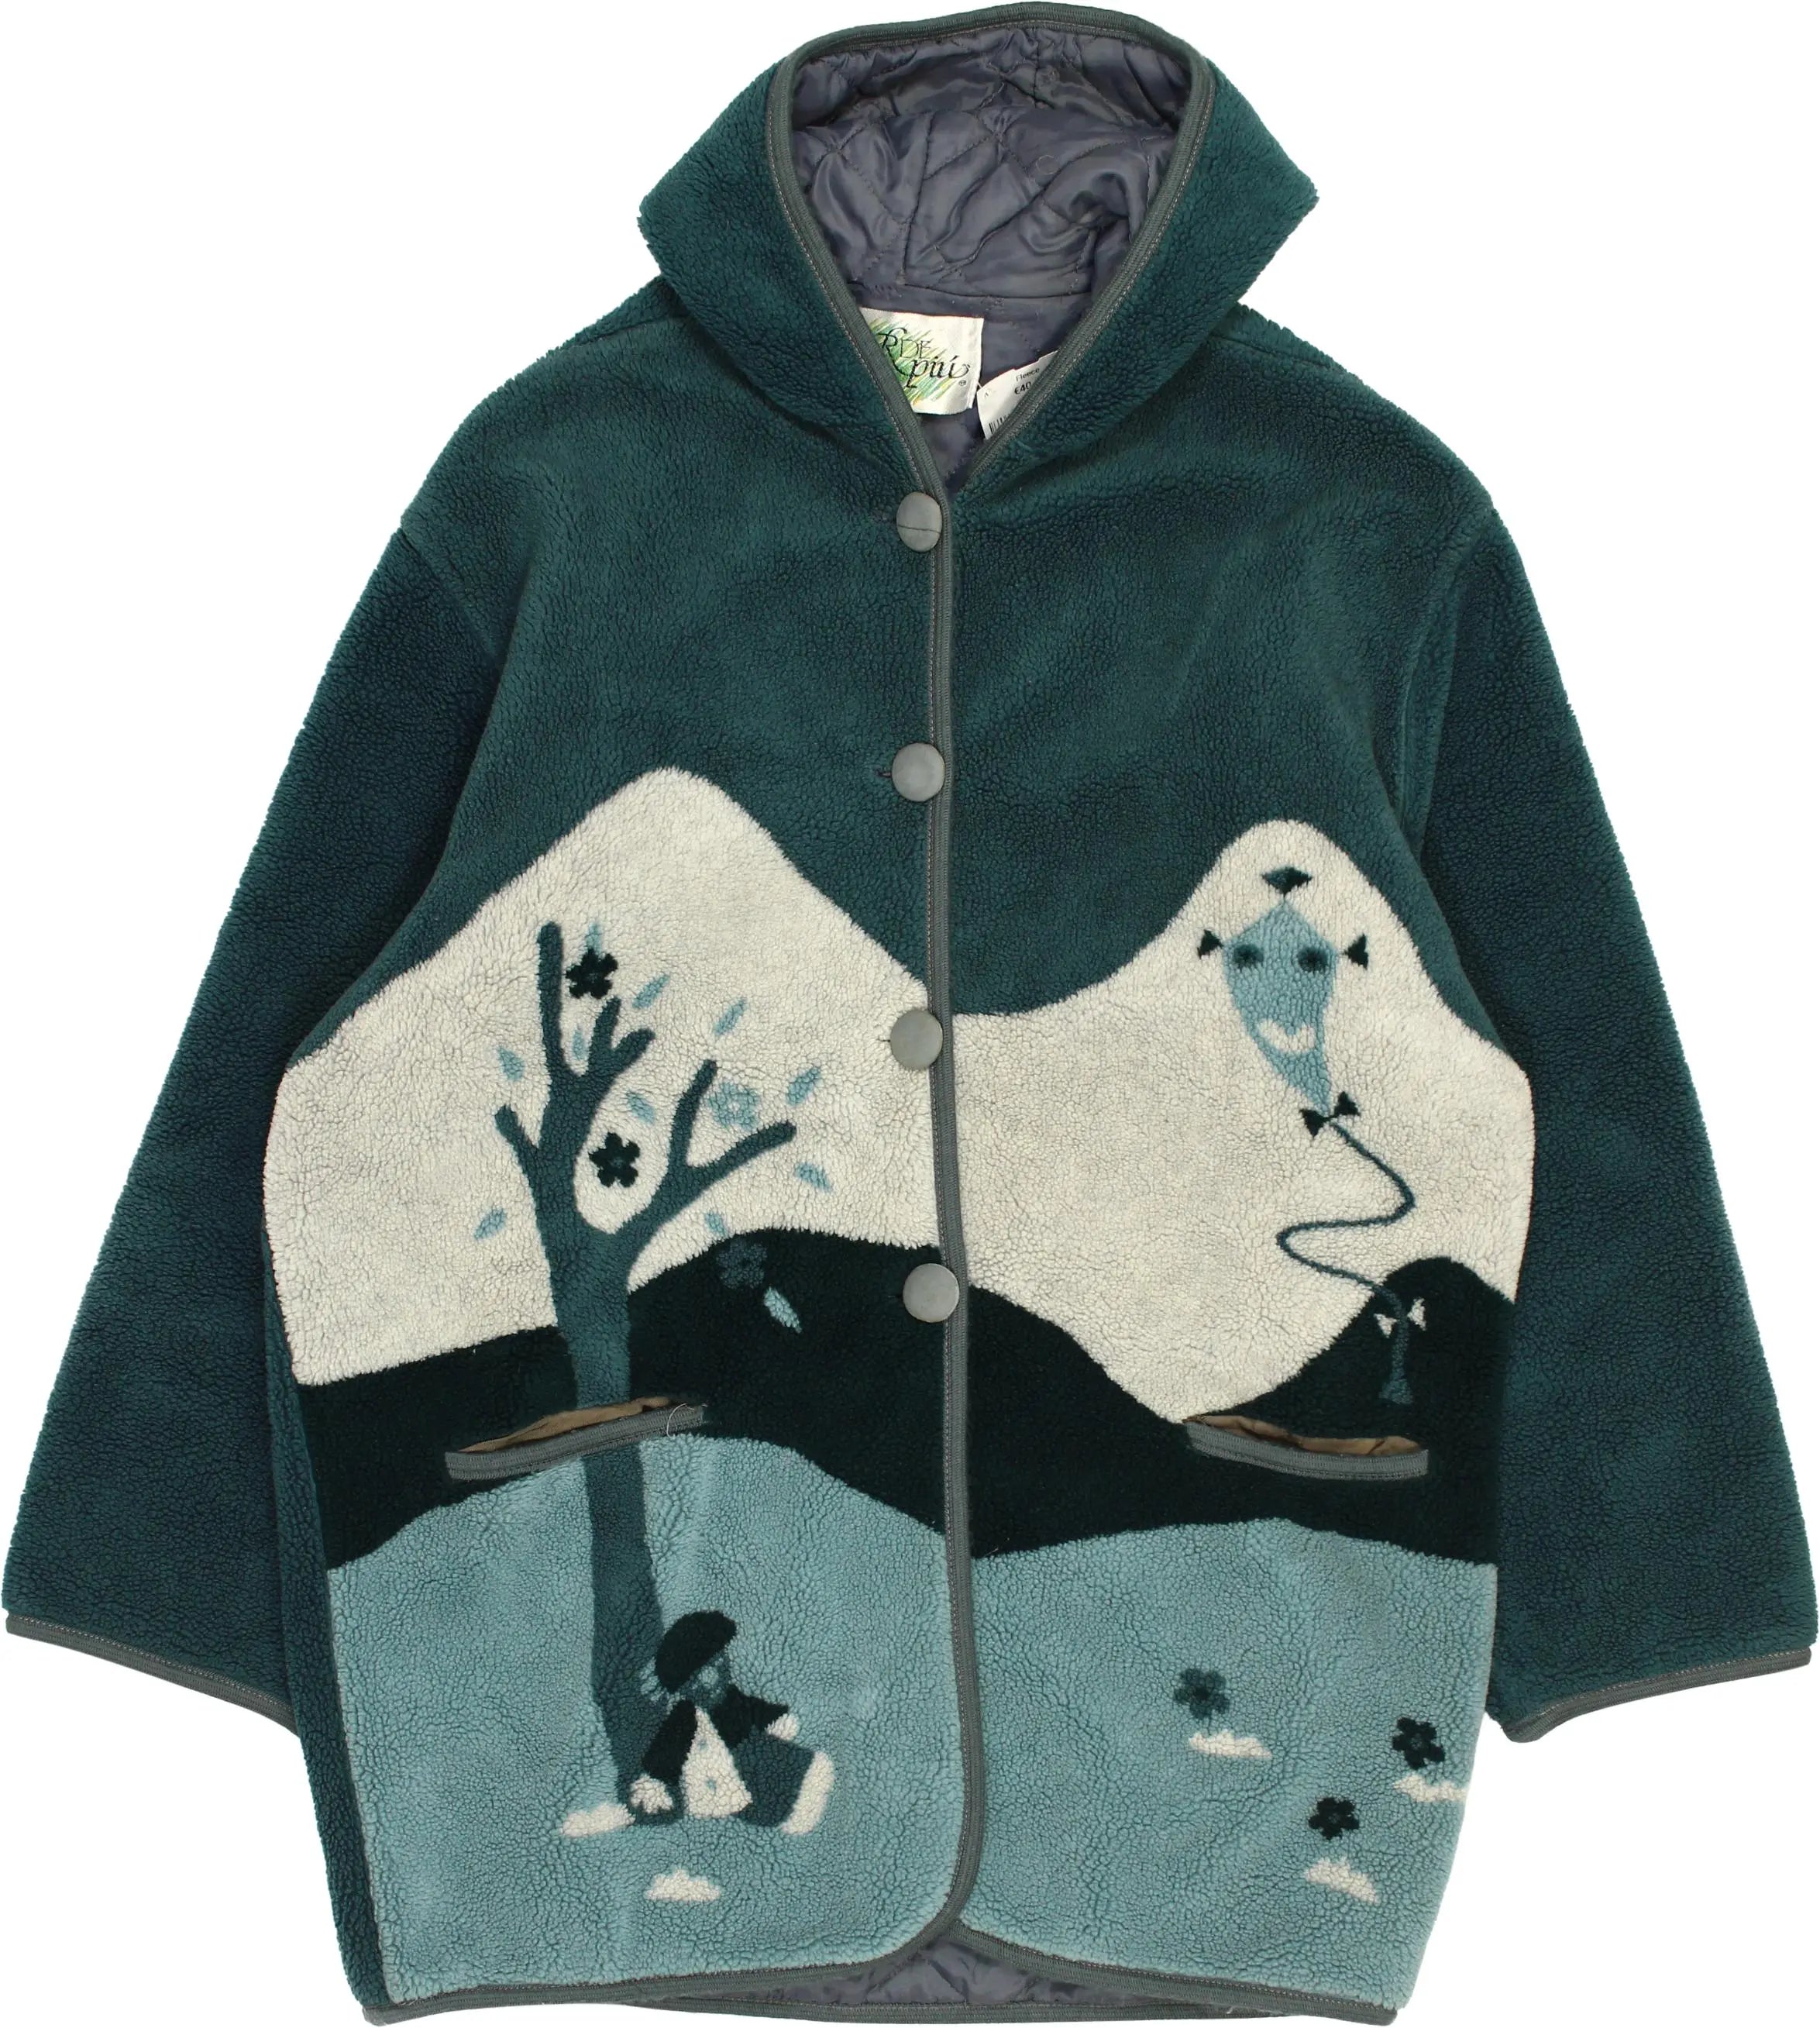 Ver de Piú - Fleece Jacket- ThriftTale.com - Vintage and second handclothing